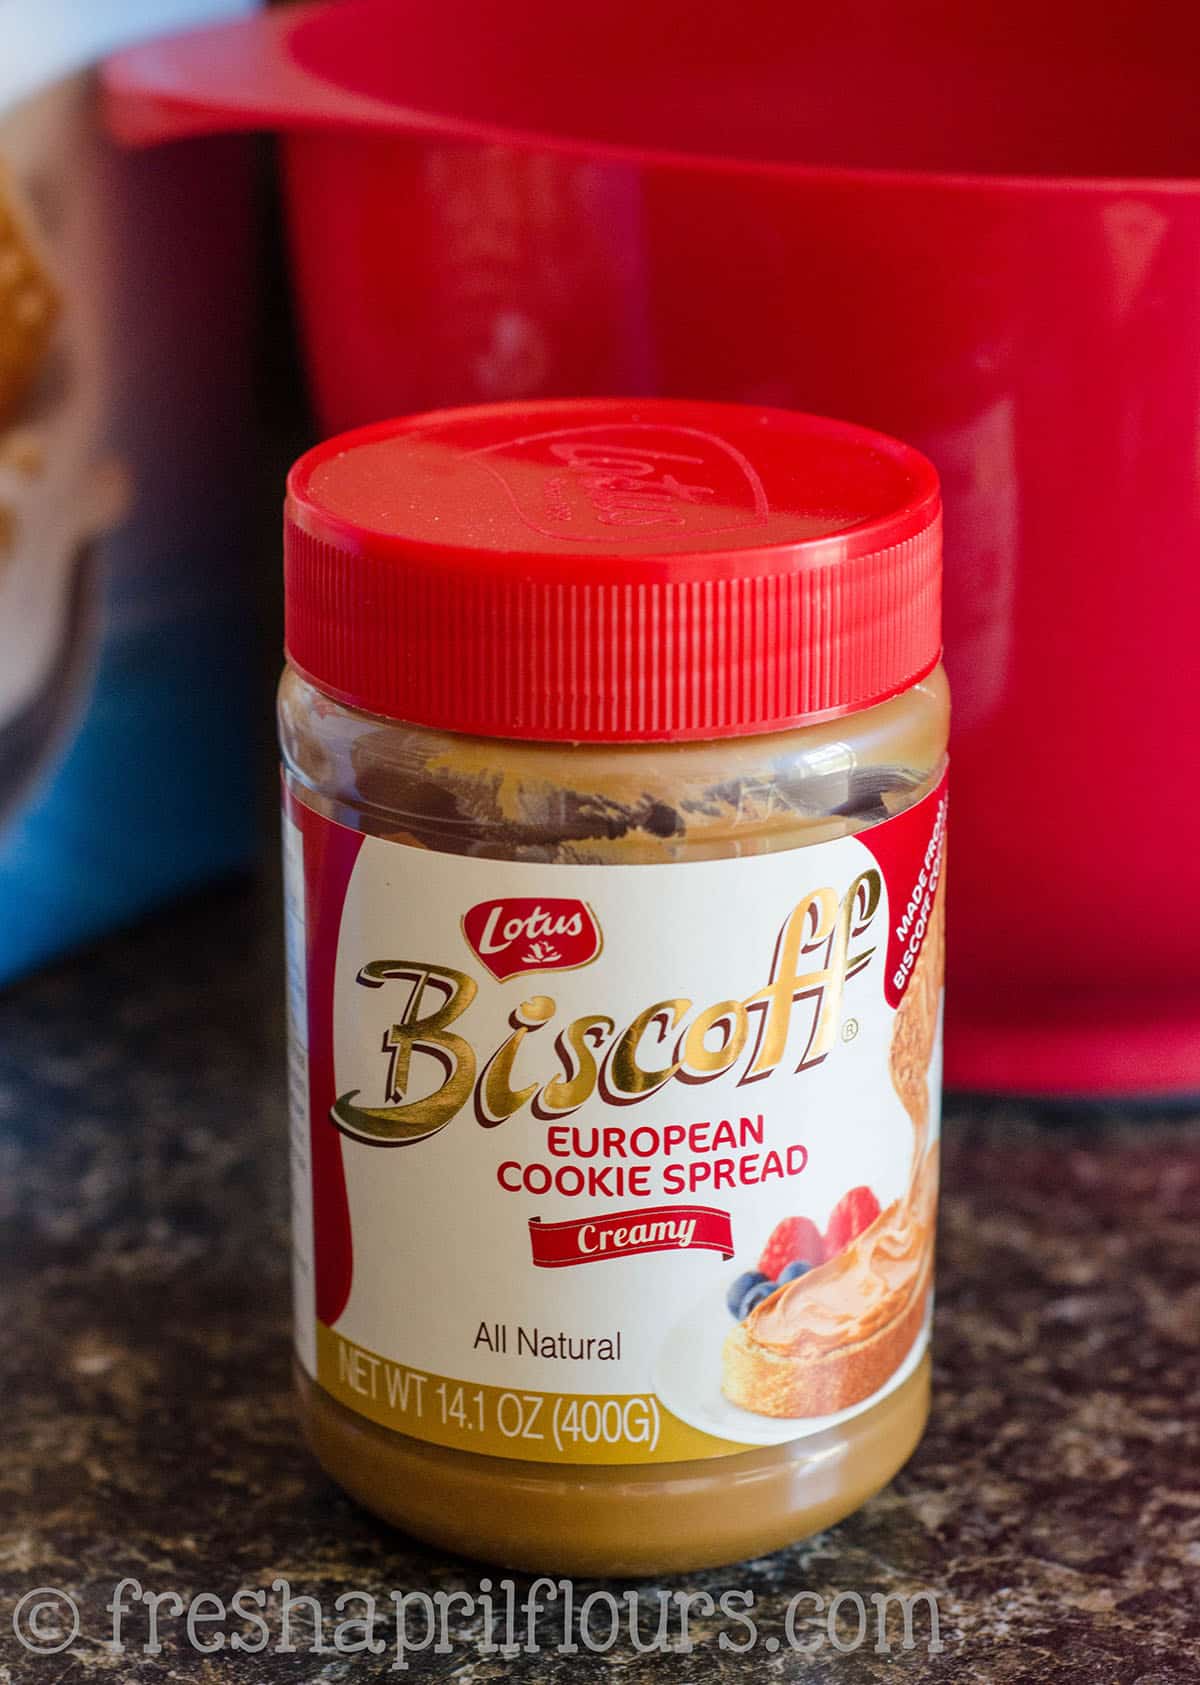 A jar of Biscoff.